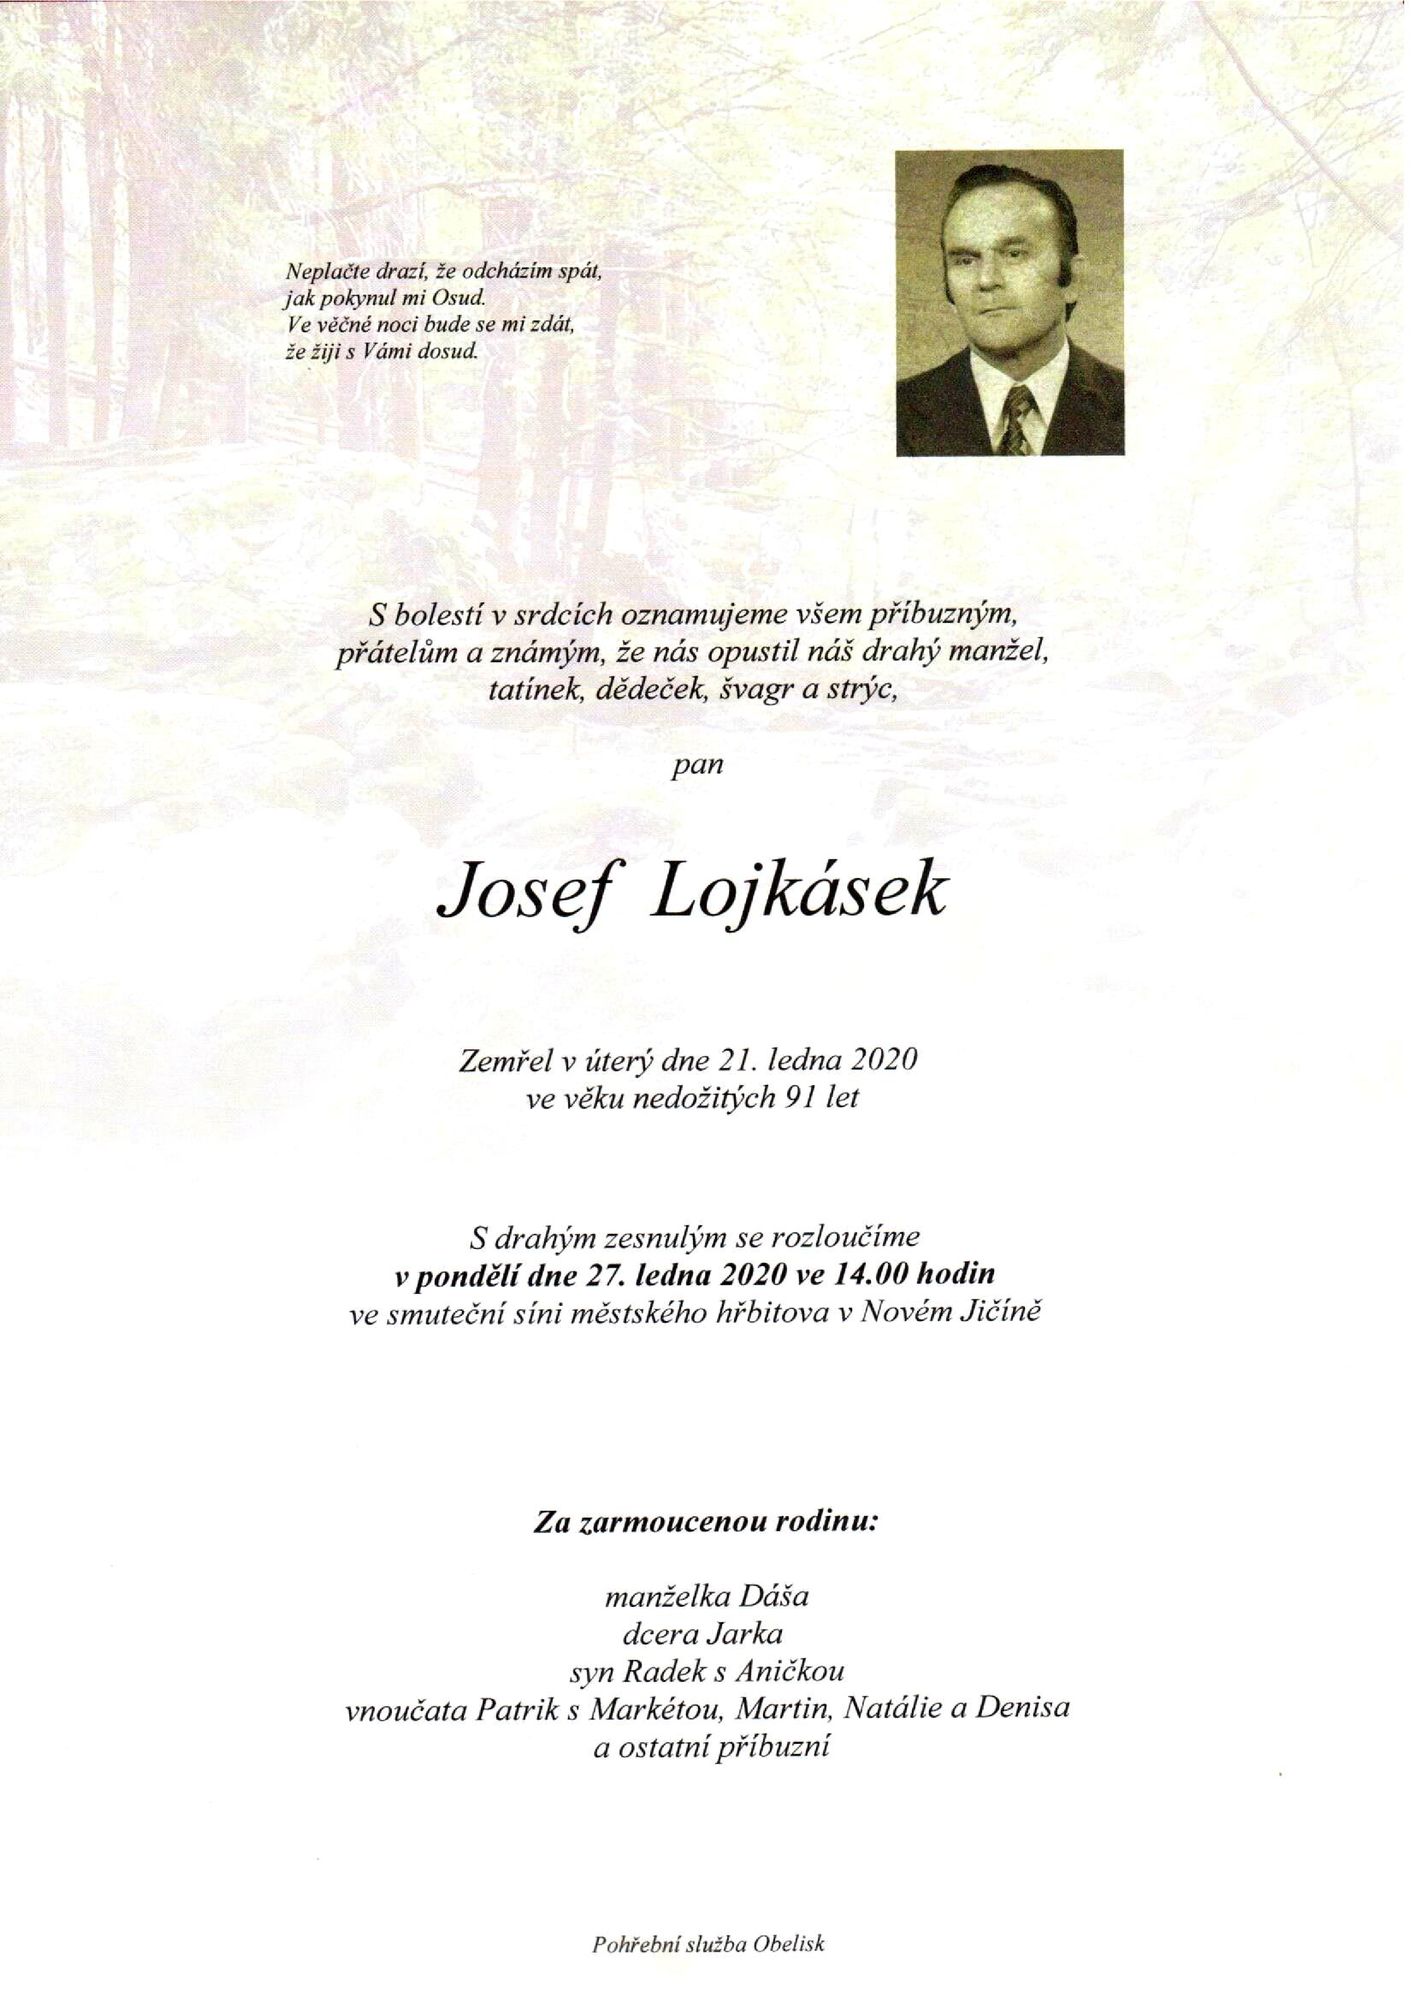 Josef Lojkásek